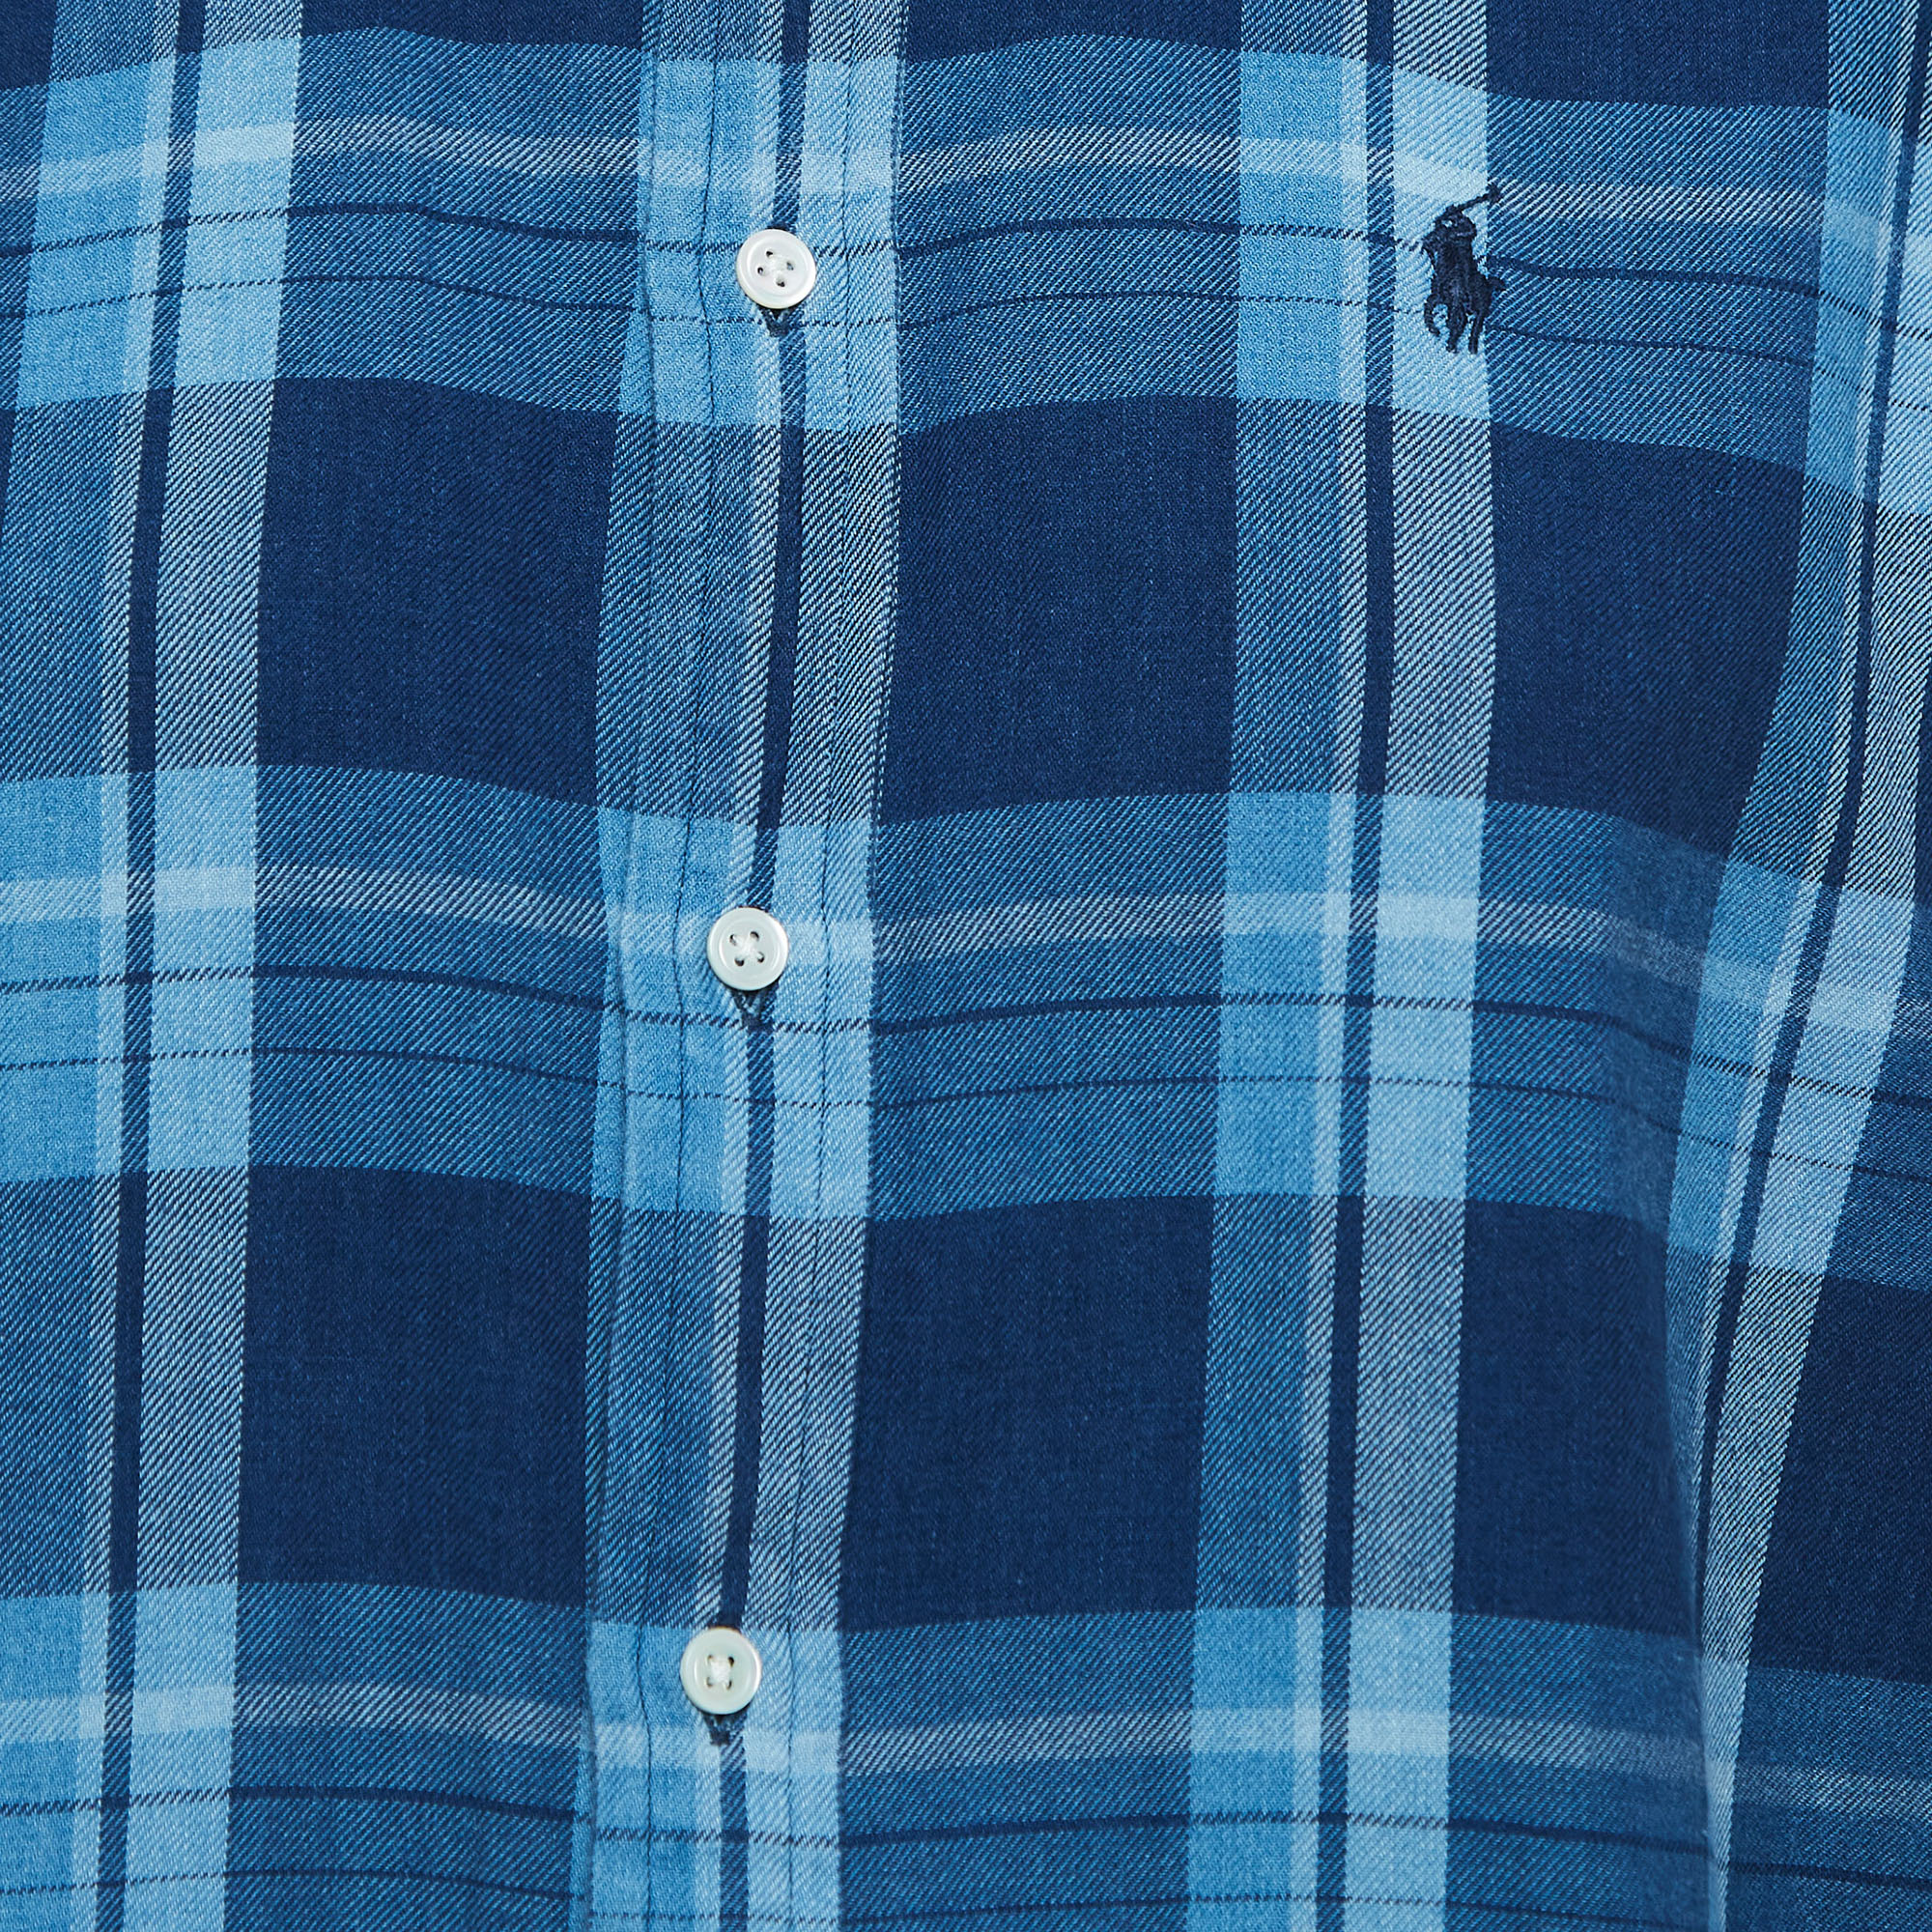 Polo Ralph Lauren Blue Plaid Cotton Button Front Full Sleeve Shirt S